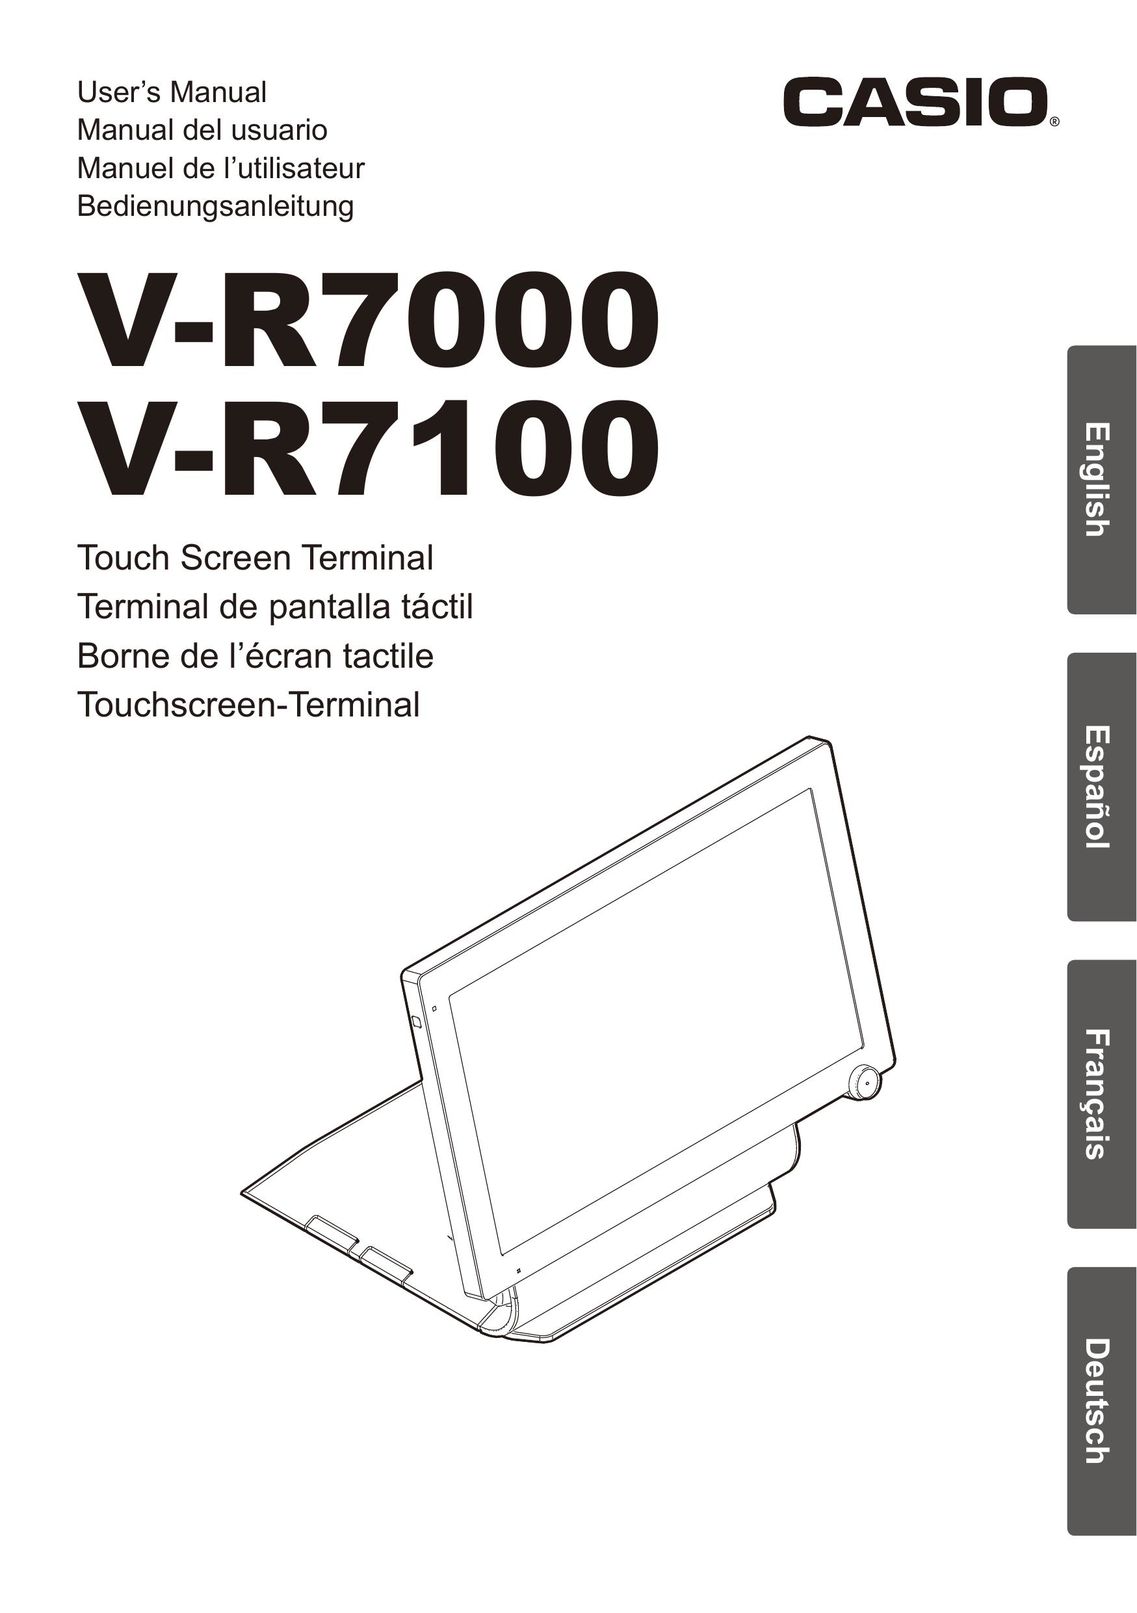 Casio V-R7000 Car Video System User Manual